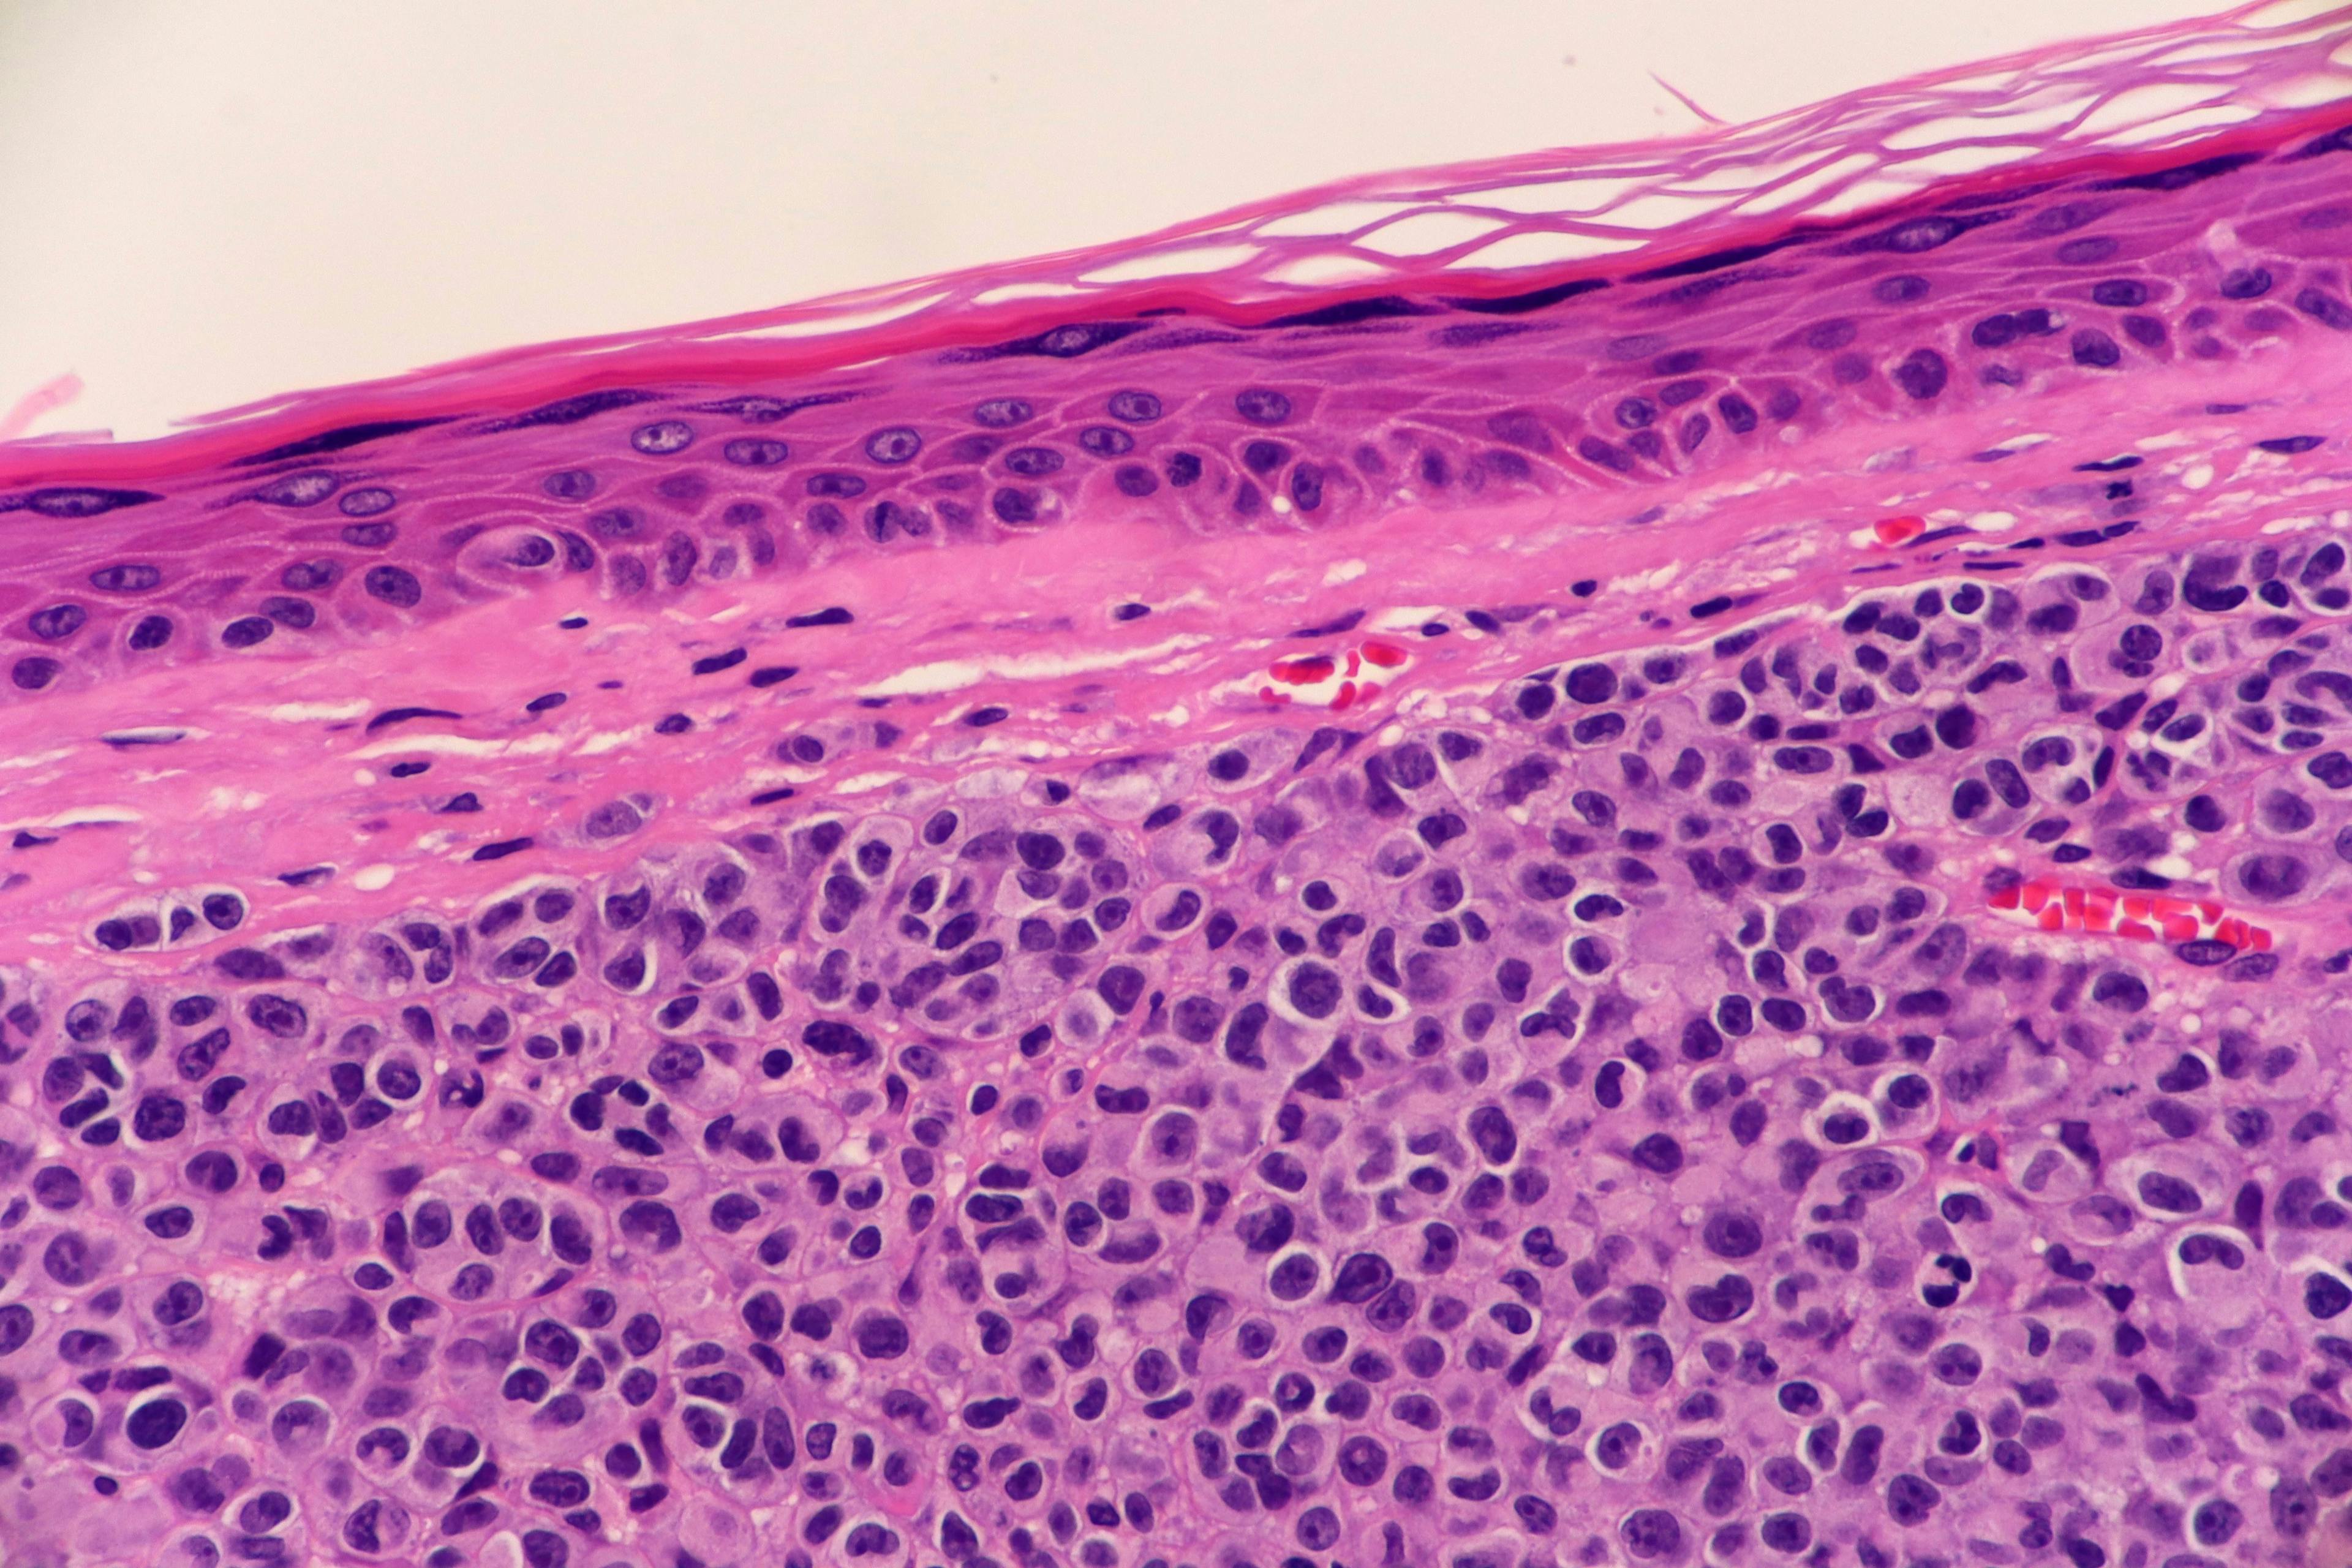 Image Credit: © Lisa - www.stock.adobe.com| A malignant skin cancer called nodular melanoma, just beneath the epidermis. Microscopic view.